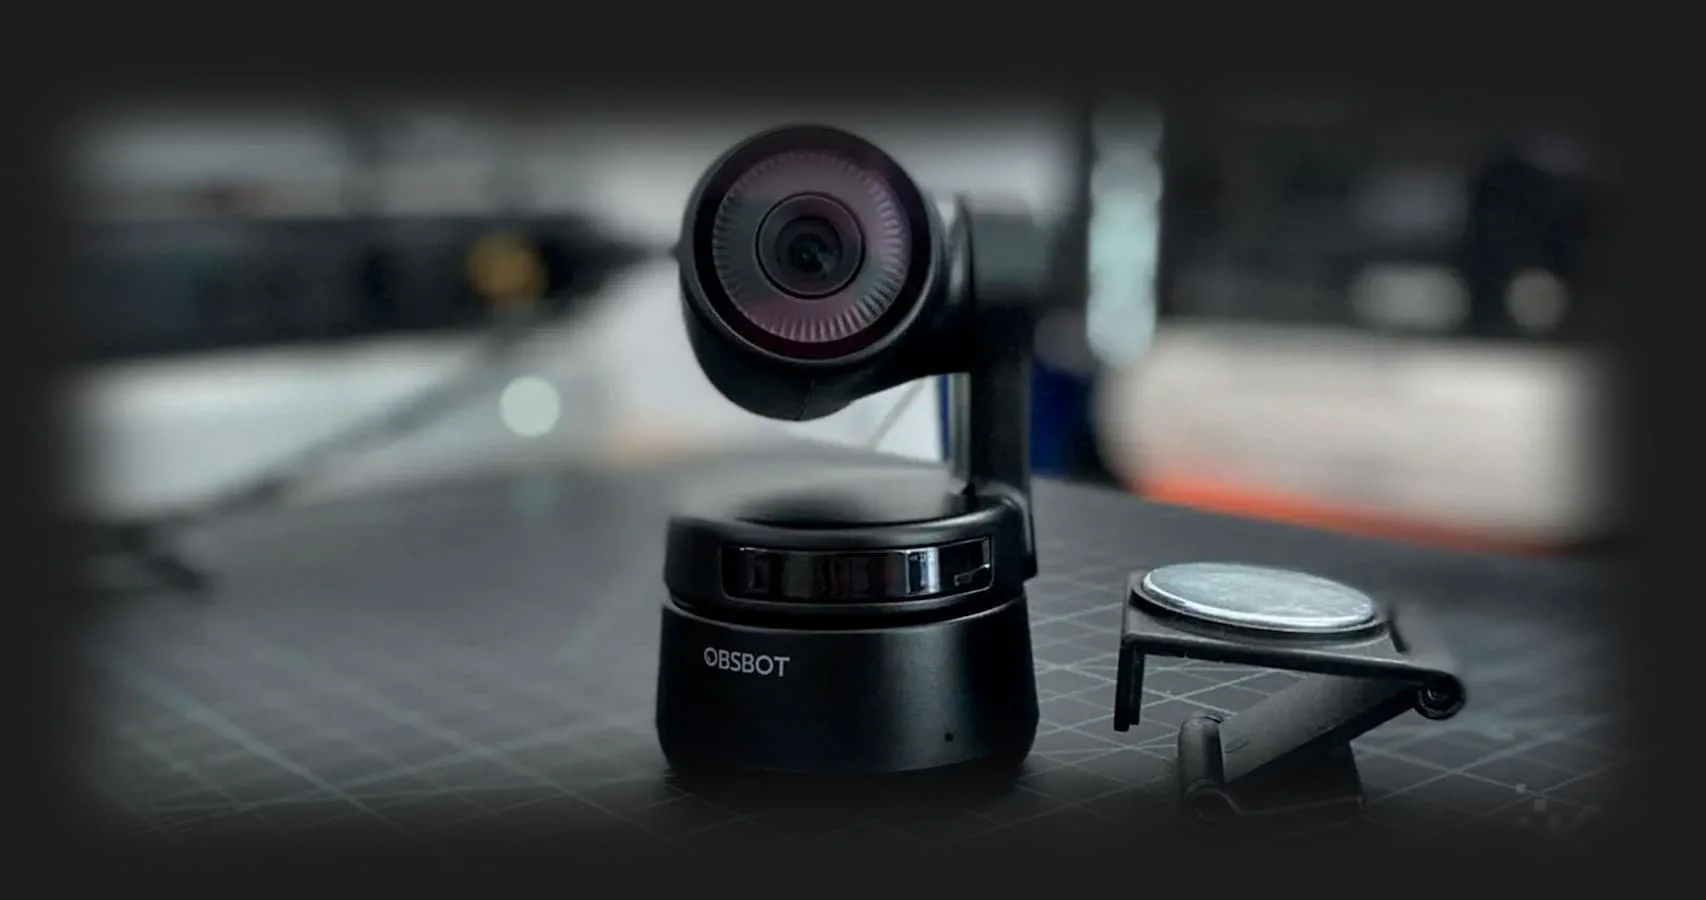 Веб-камера OBSBOT Tiny (1920x1080)